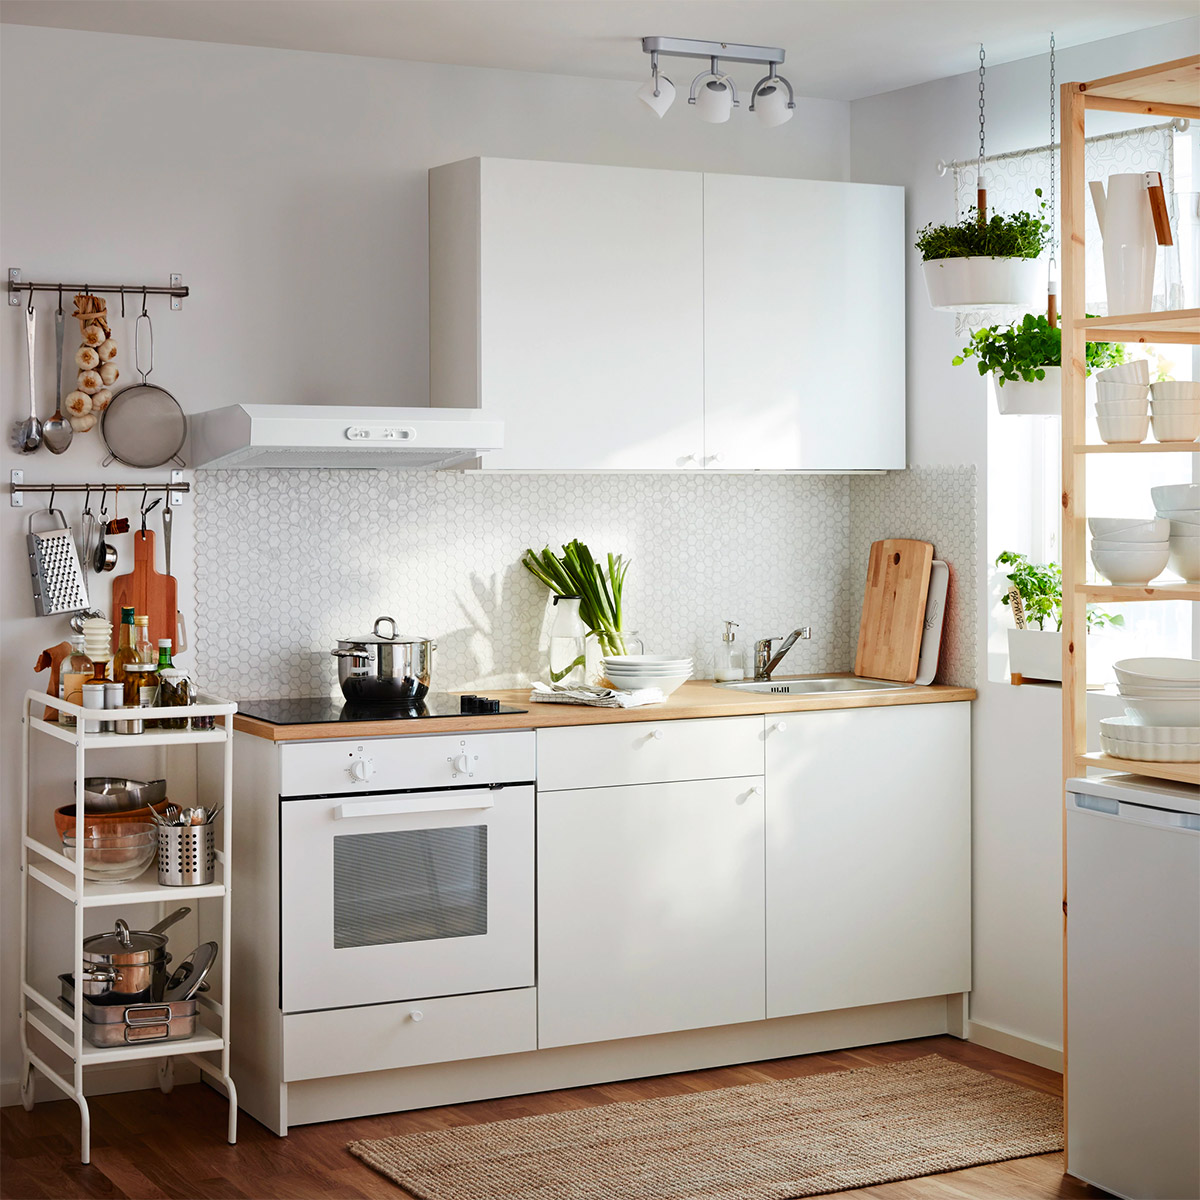 Small Kitchen Stand Interior Design Ideas